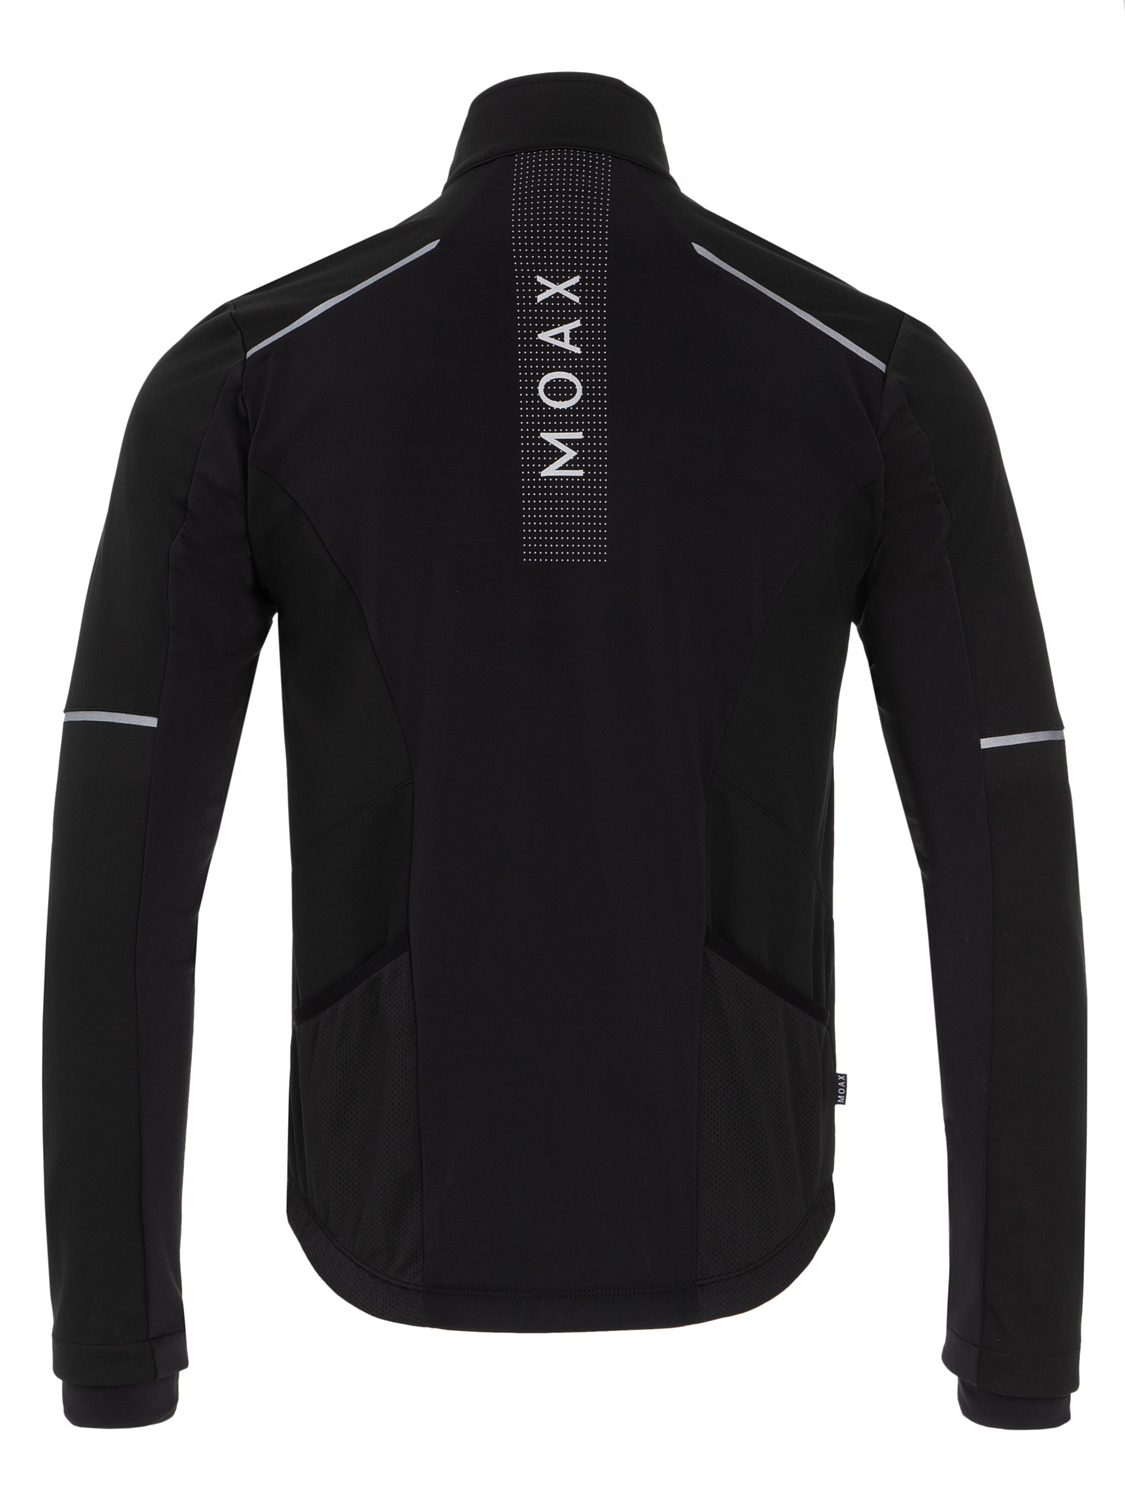 Куртка беговая MOAX Tokke Softshell Черный